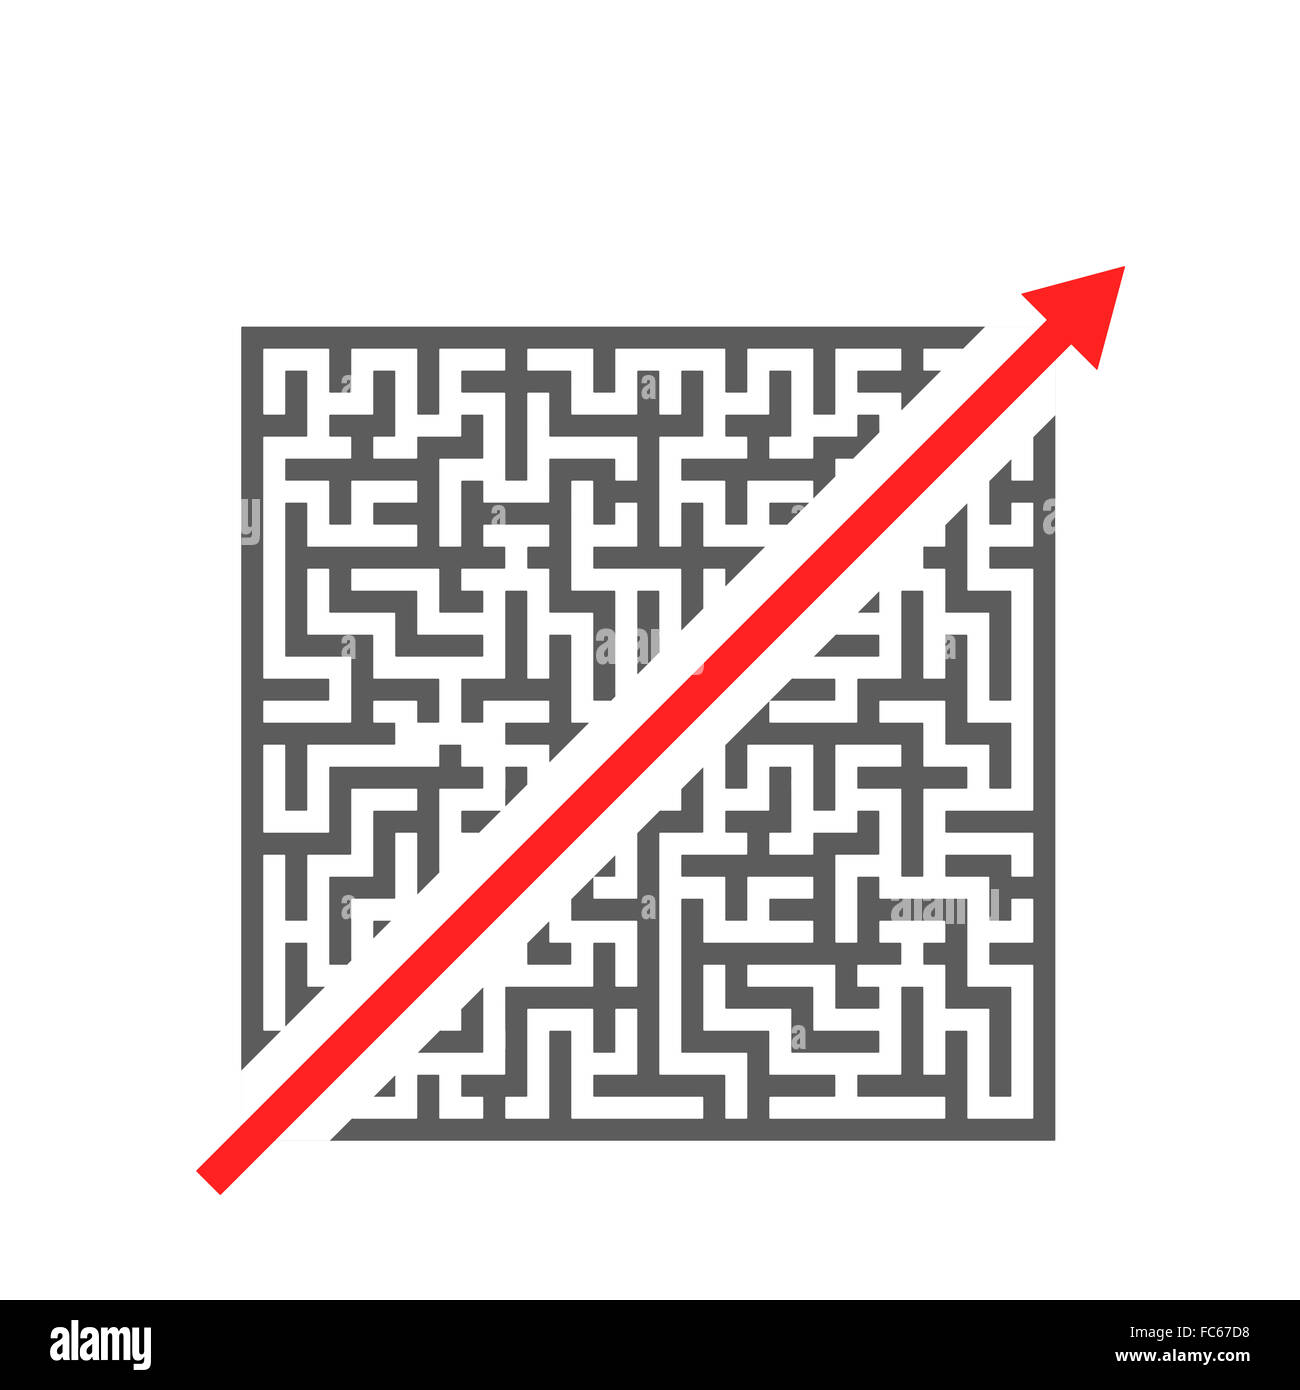 Labyrinth-Verknüpfung Stockfoto